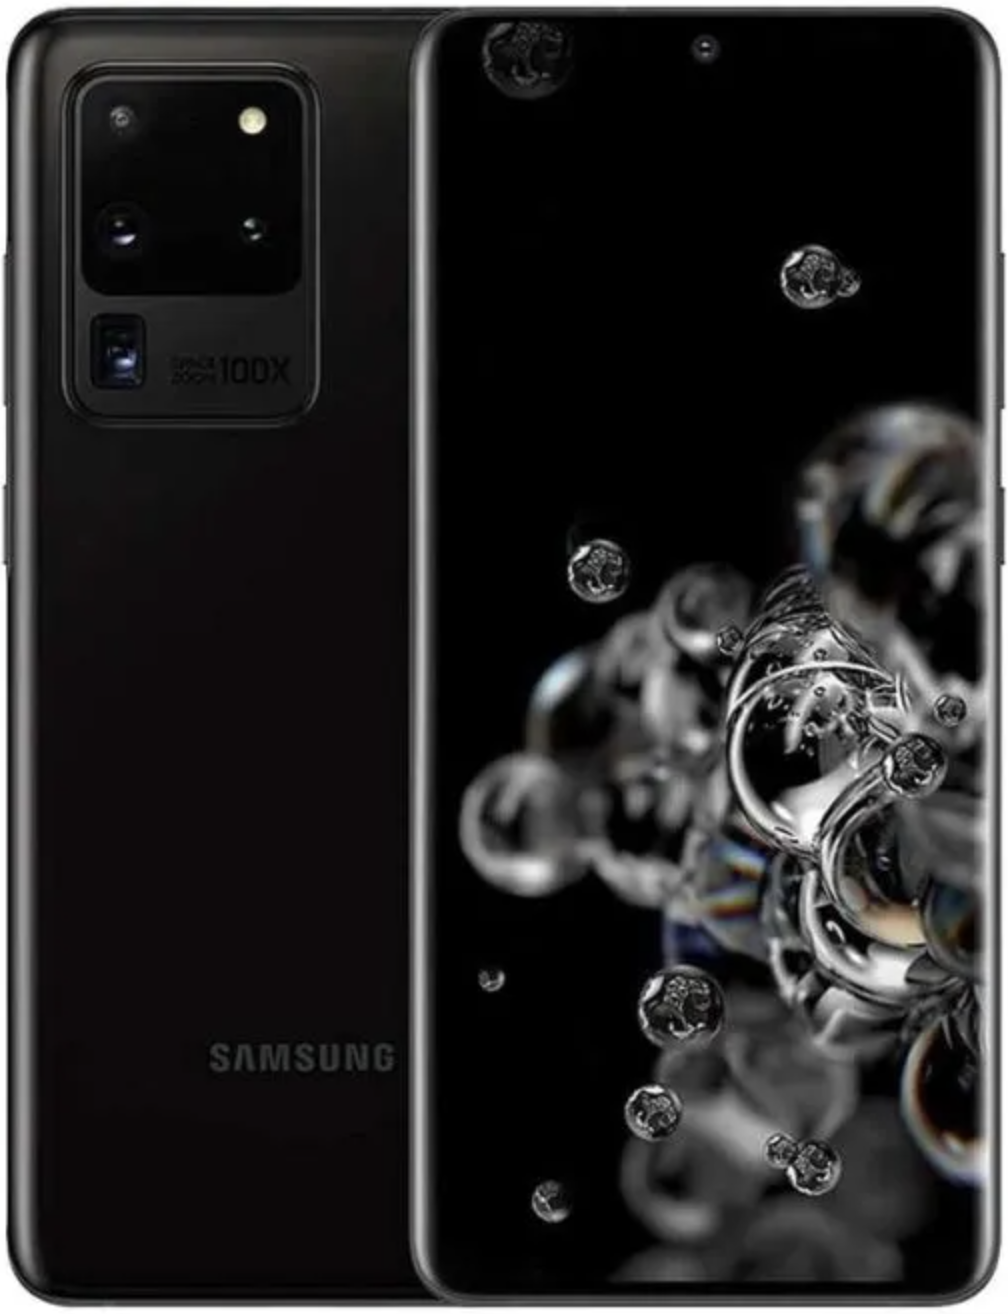 Galaxy S20 Ultra . Image